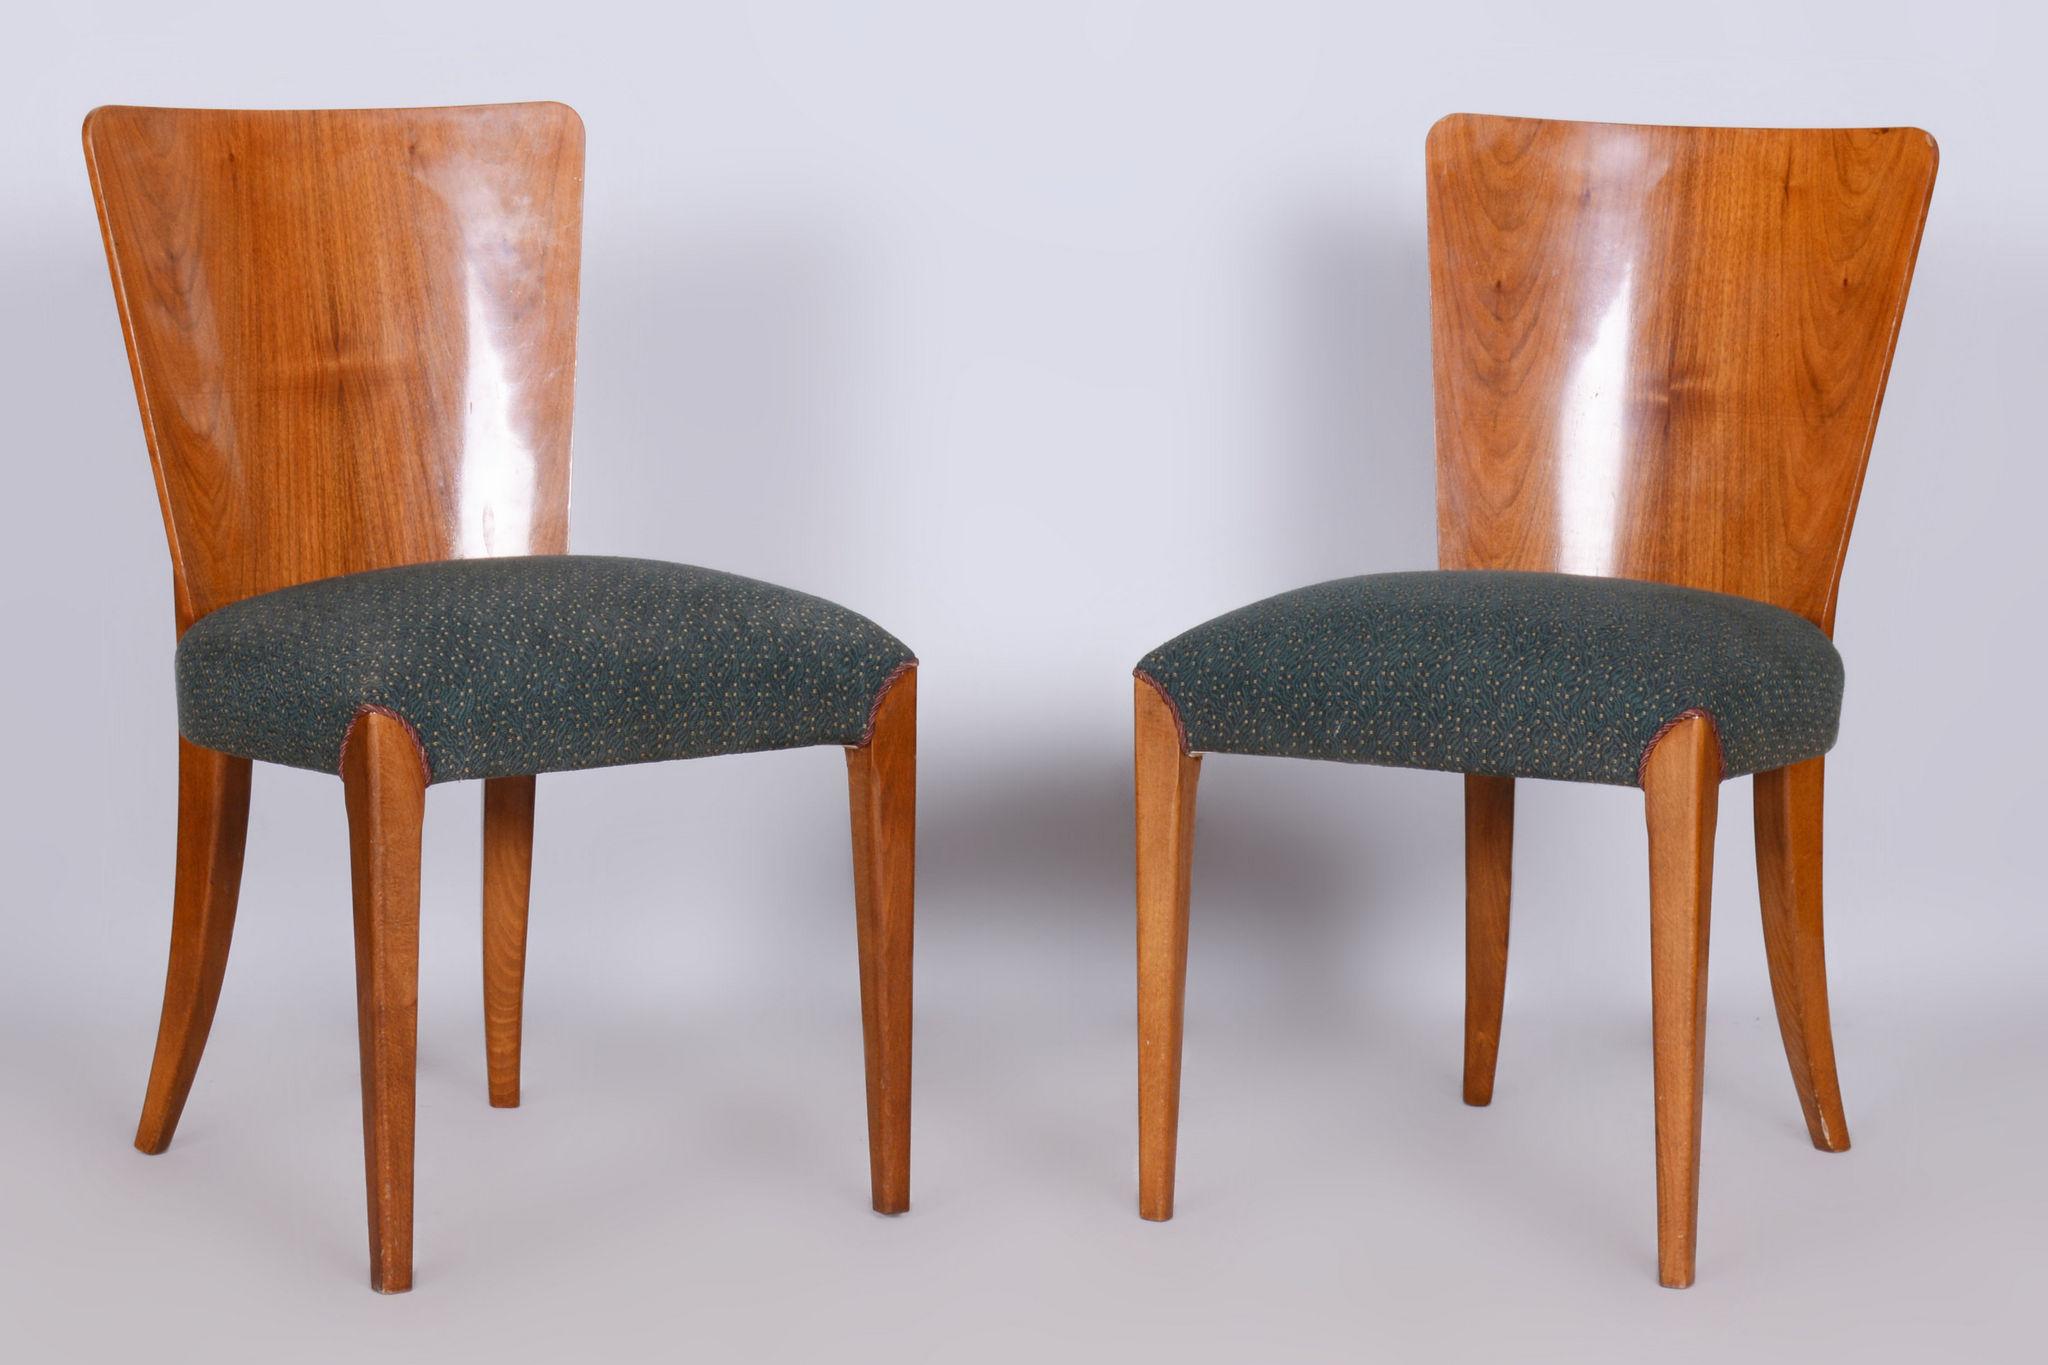 Upholstery Set of Four Original ArtDeco Chairs, Halabala, UP Zavody, Beech, Czechia, 1940s For Sale